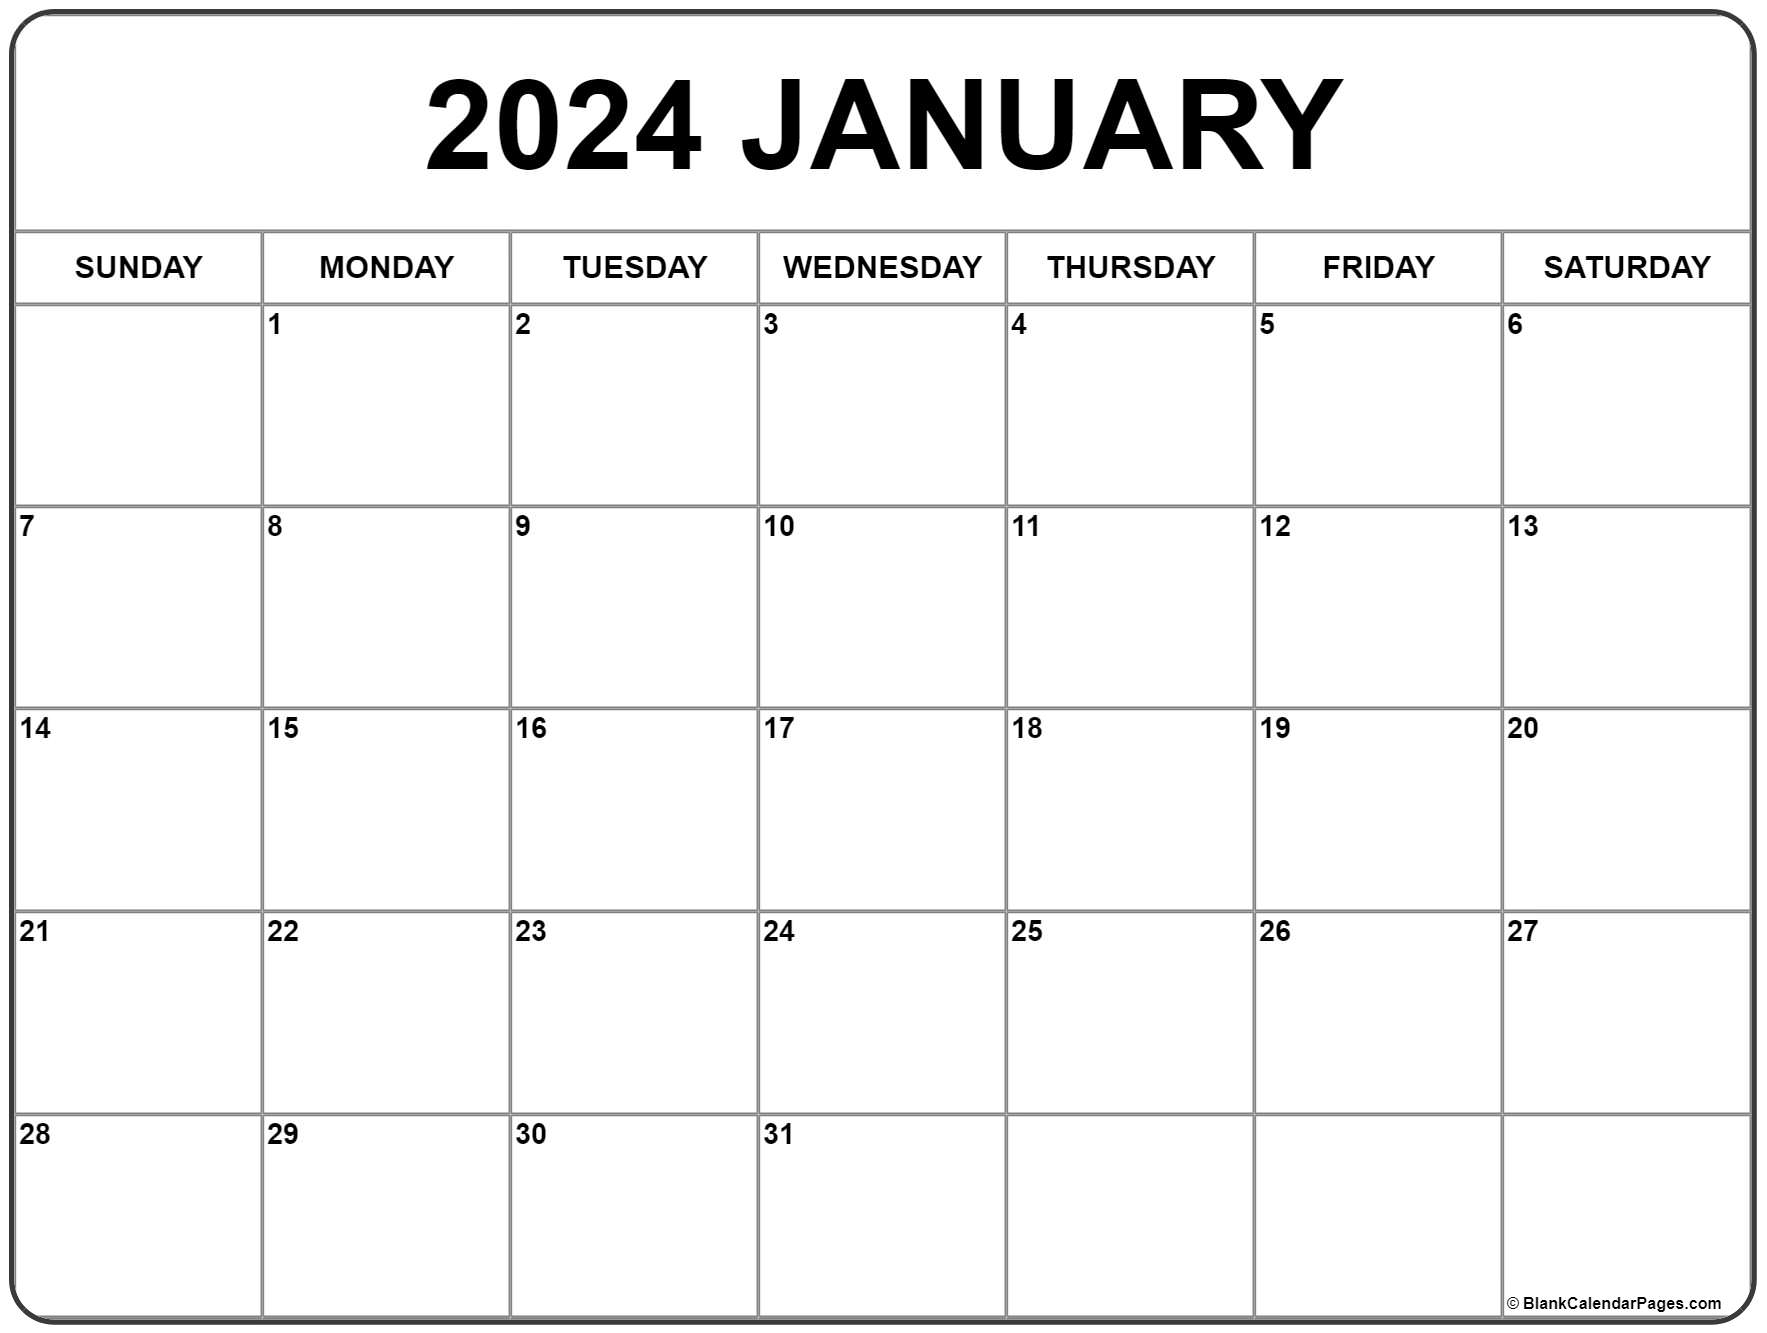 Free January 2022 Printable Calendar January 2022 Calendar | Free Printable Calendar Templates